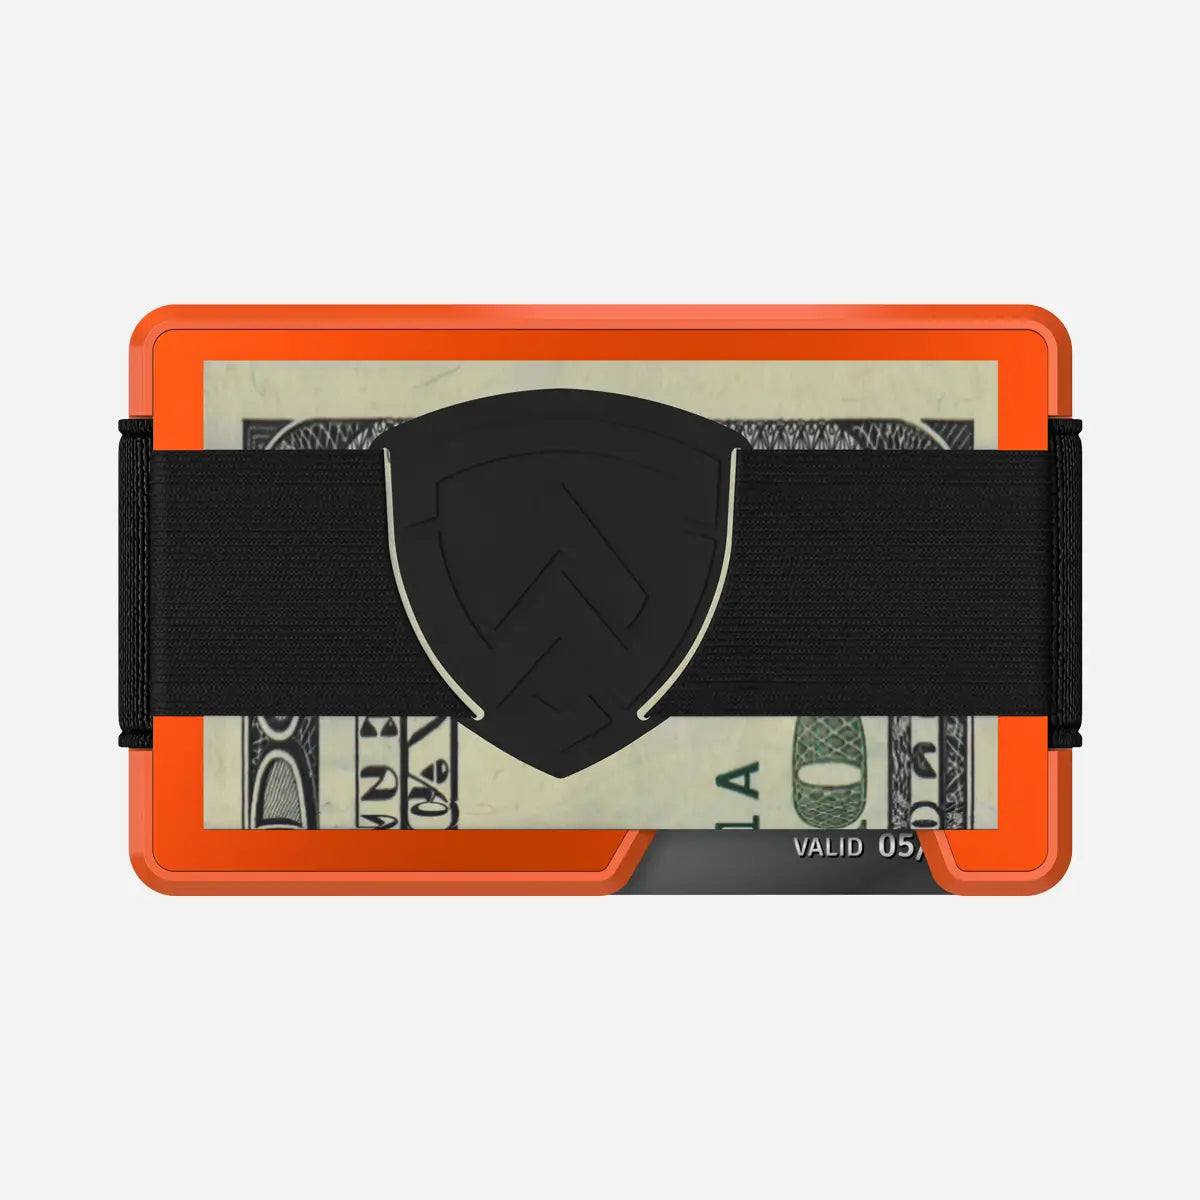 Axwell Blaze Orange AirTag Wallet